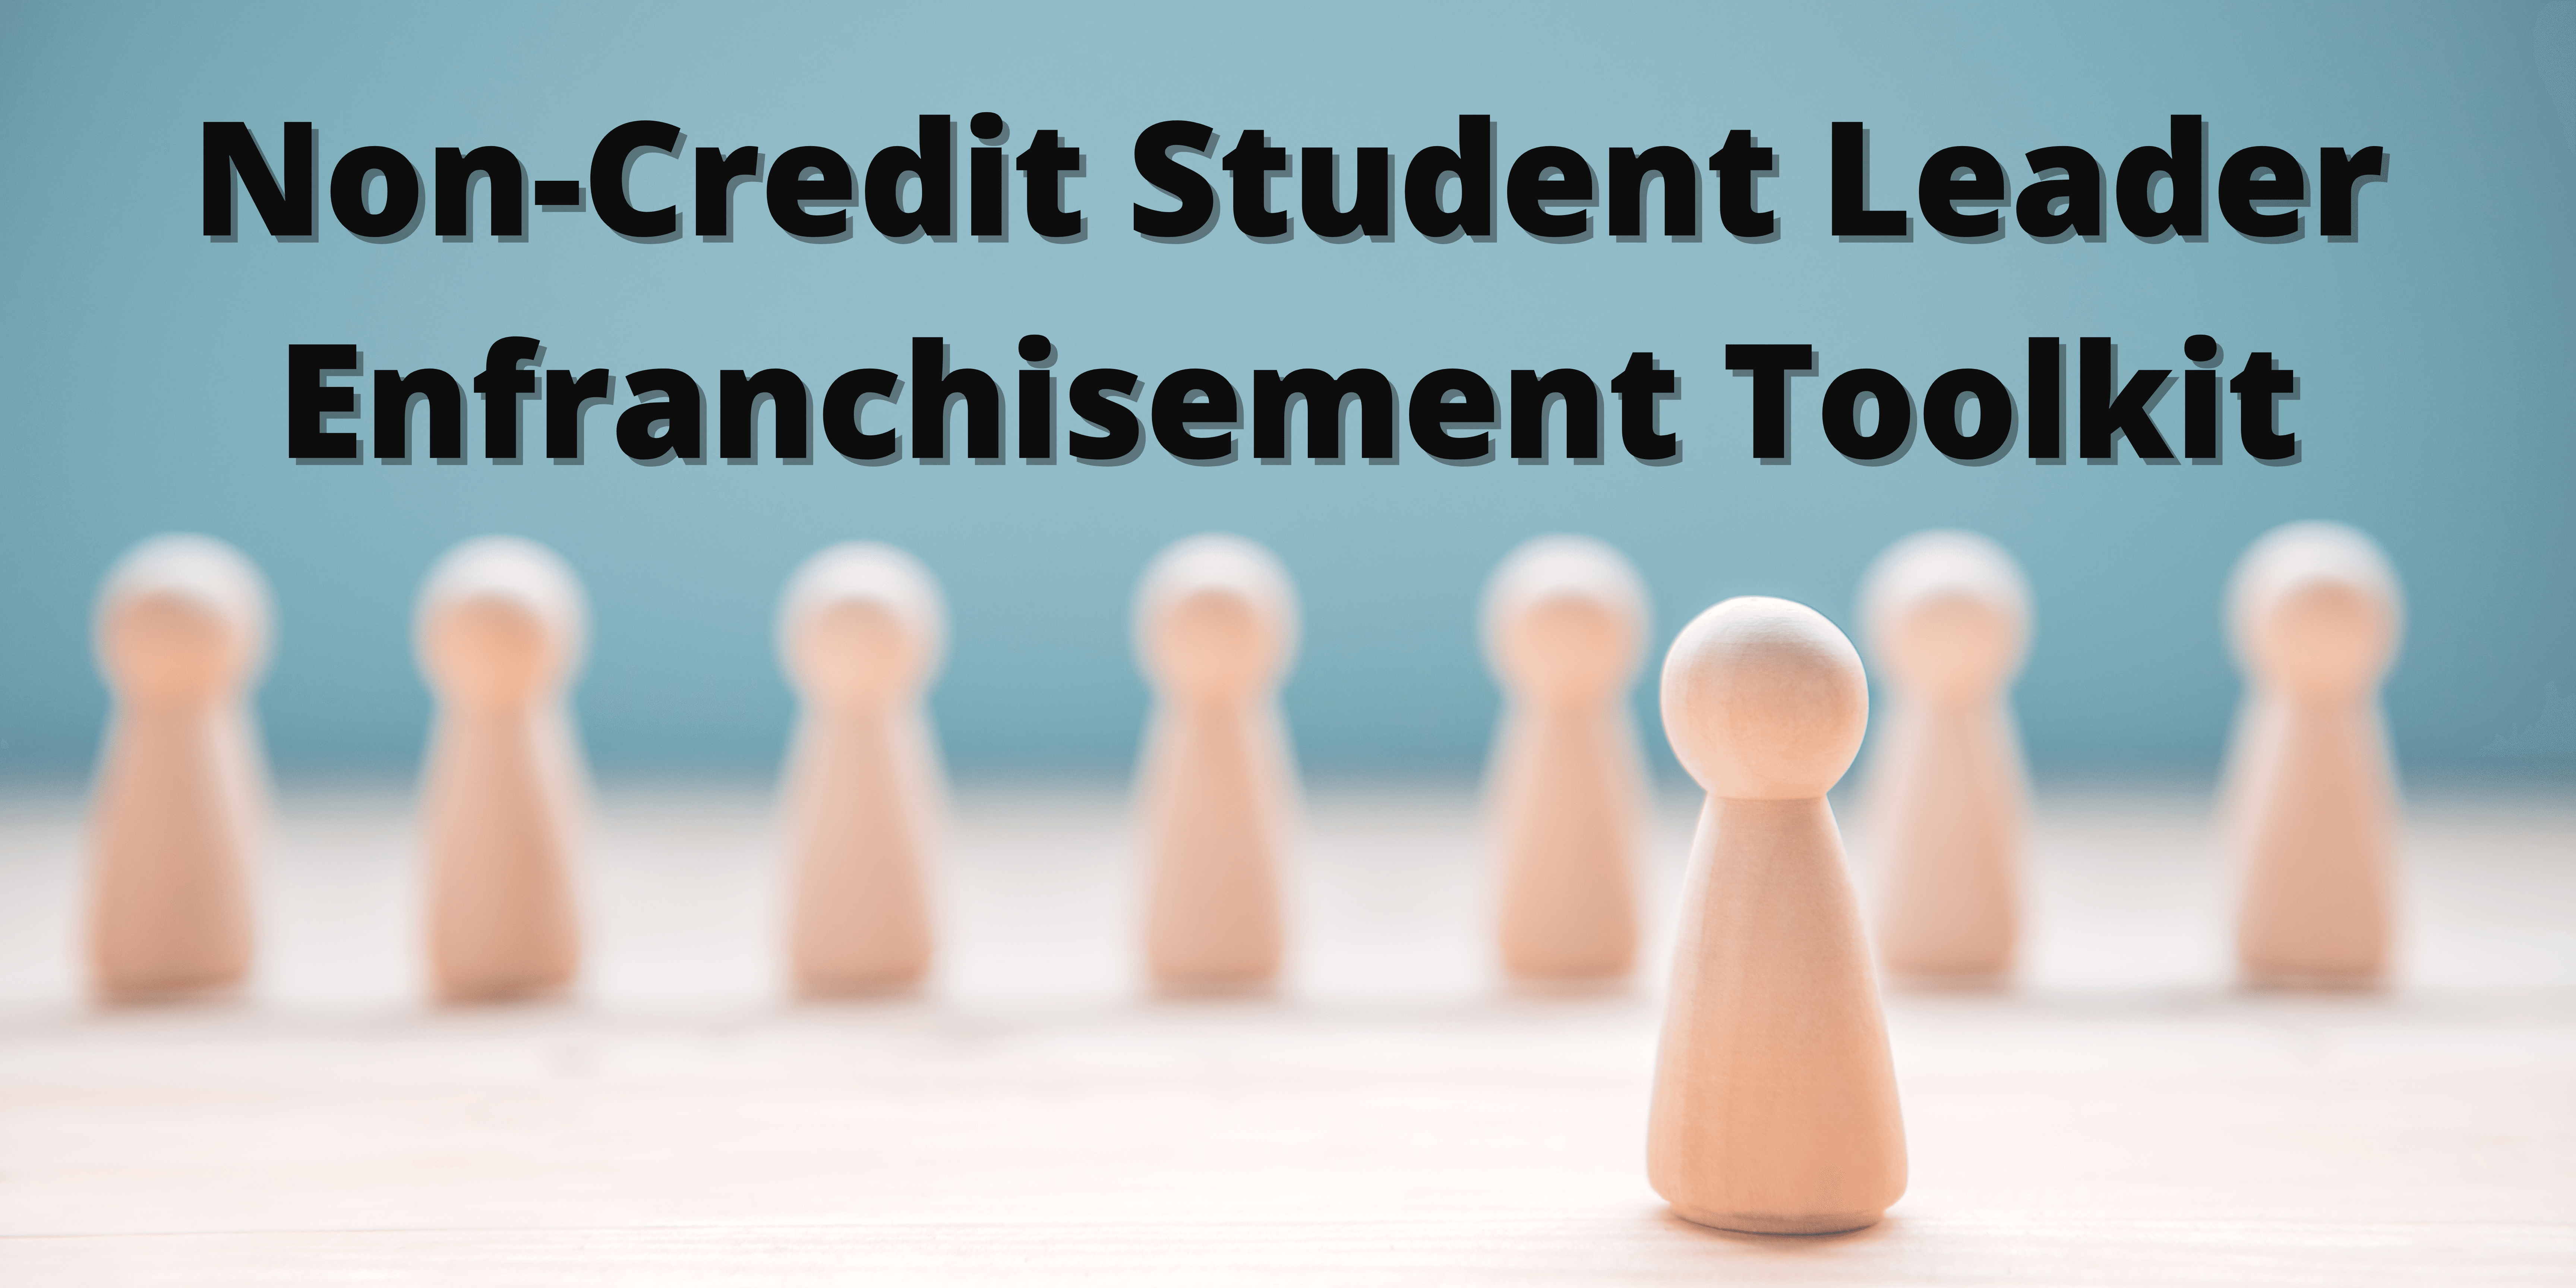 Non-Credit Student Leader Enfranchisement Toolkit